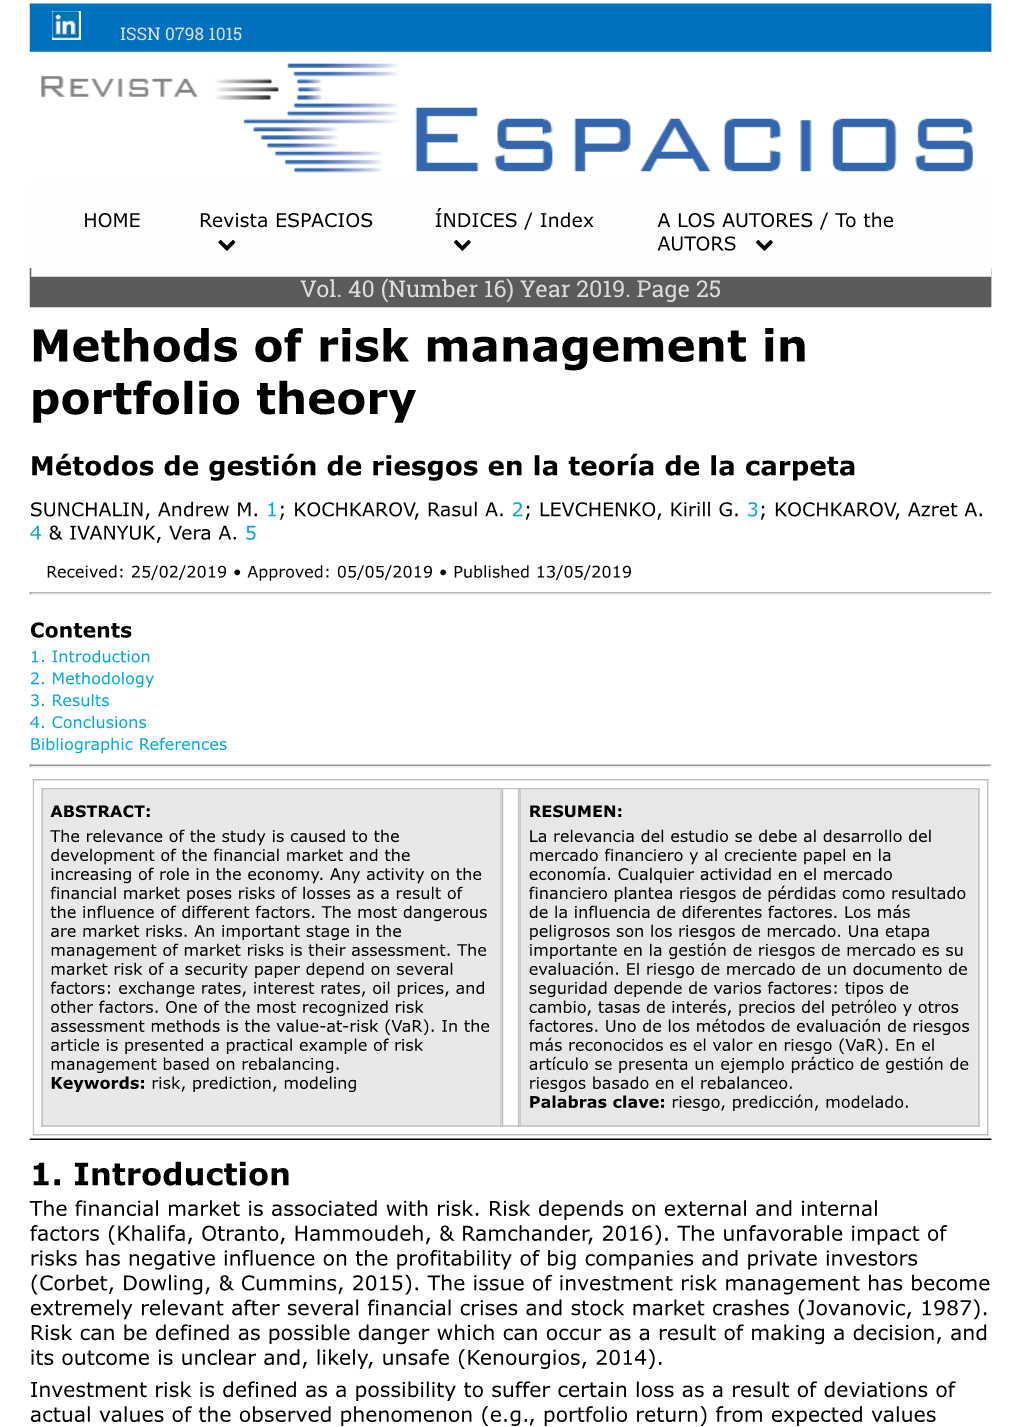 Methods of Risk Management in Portfolio Theory